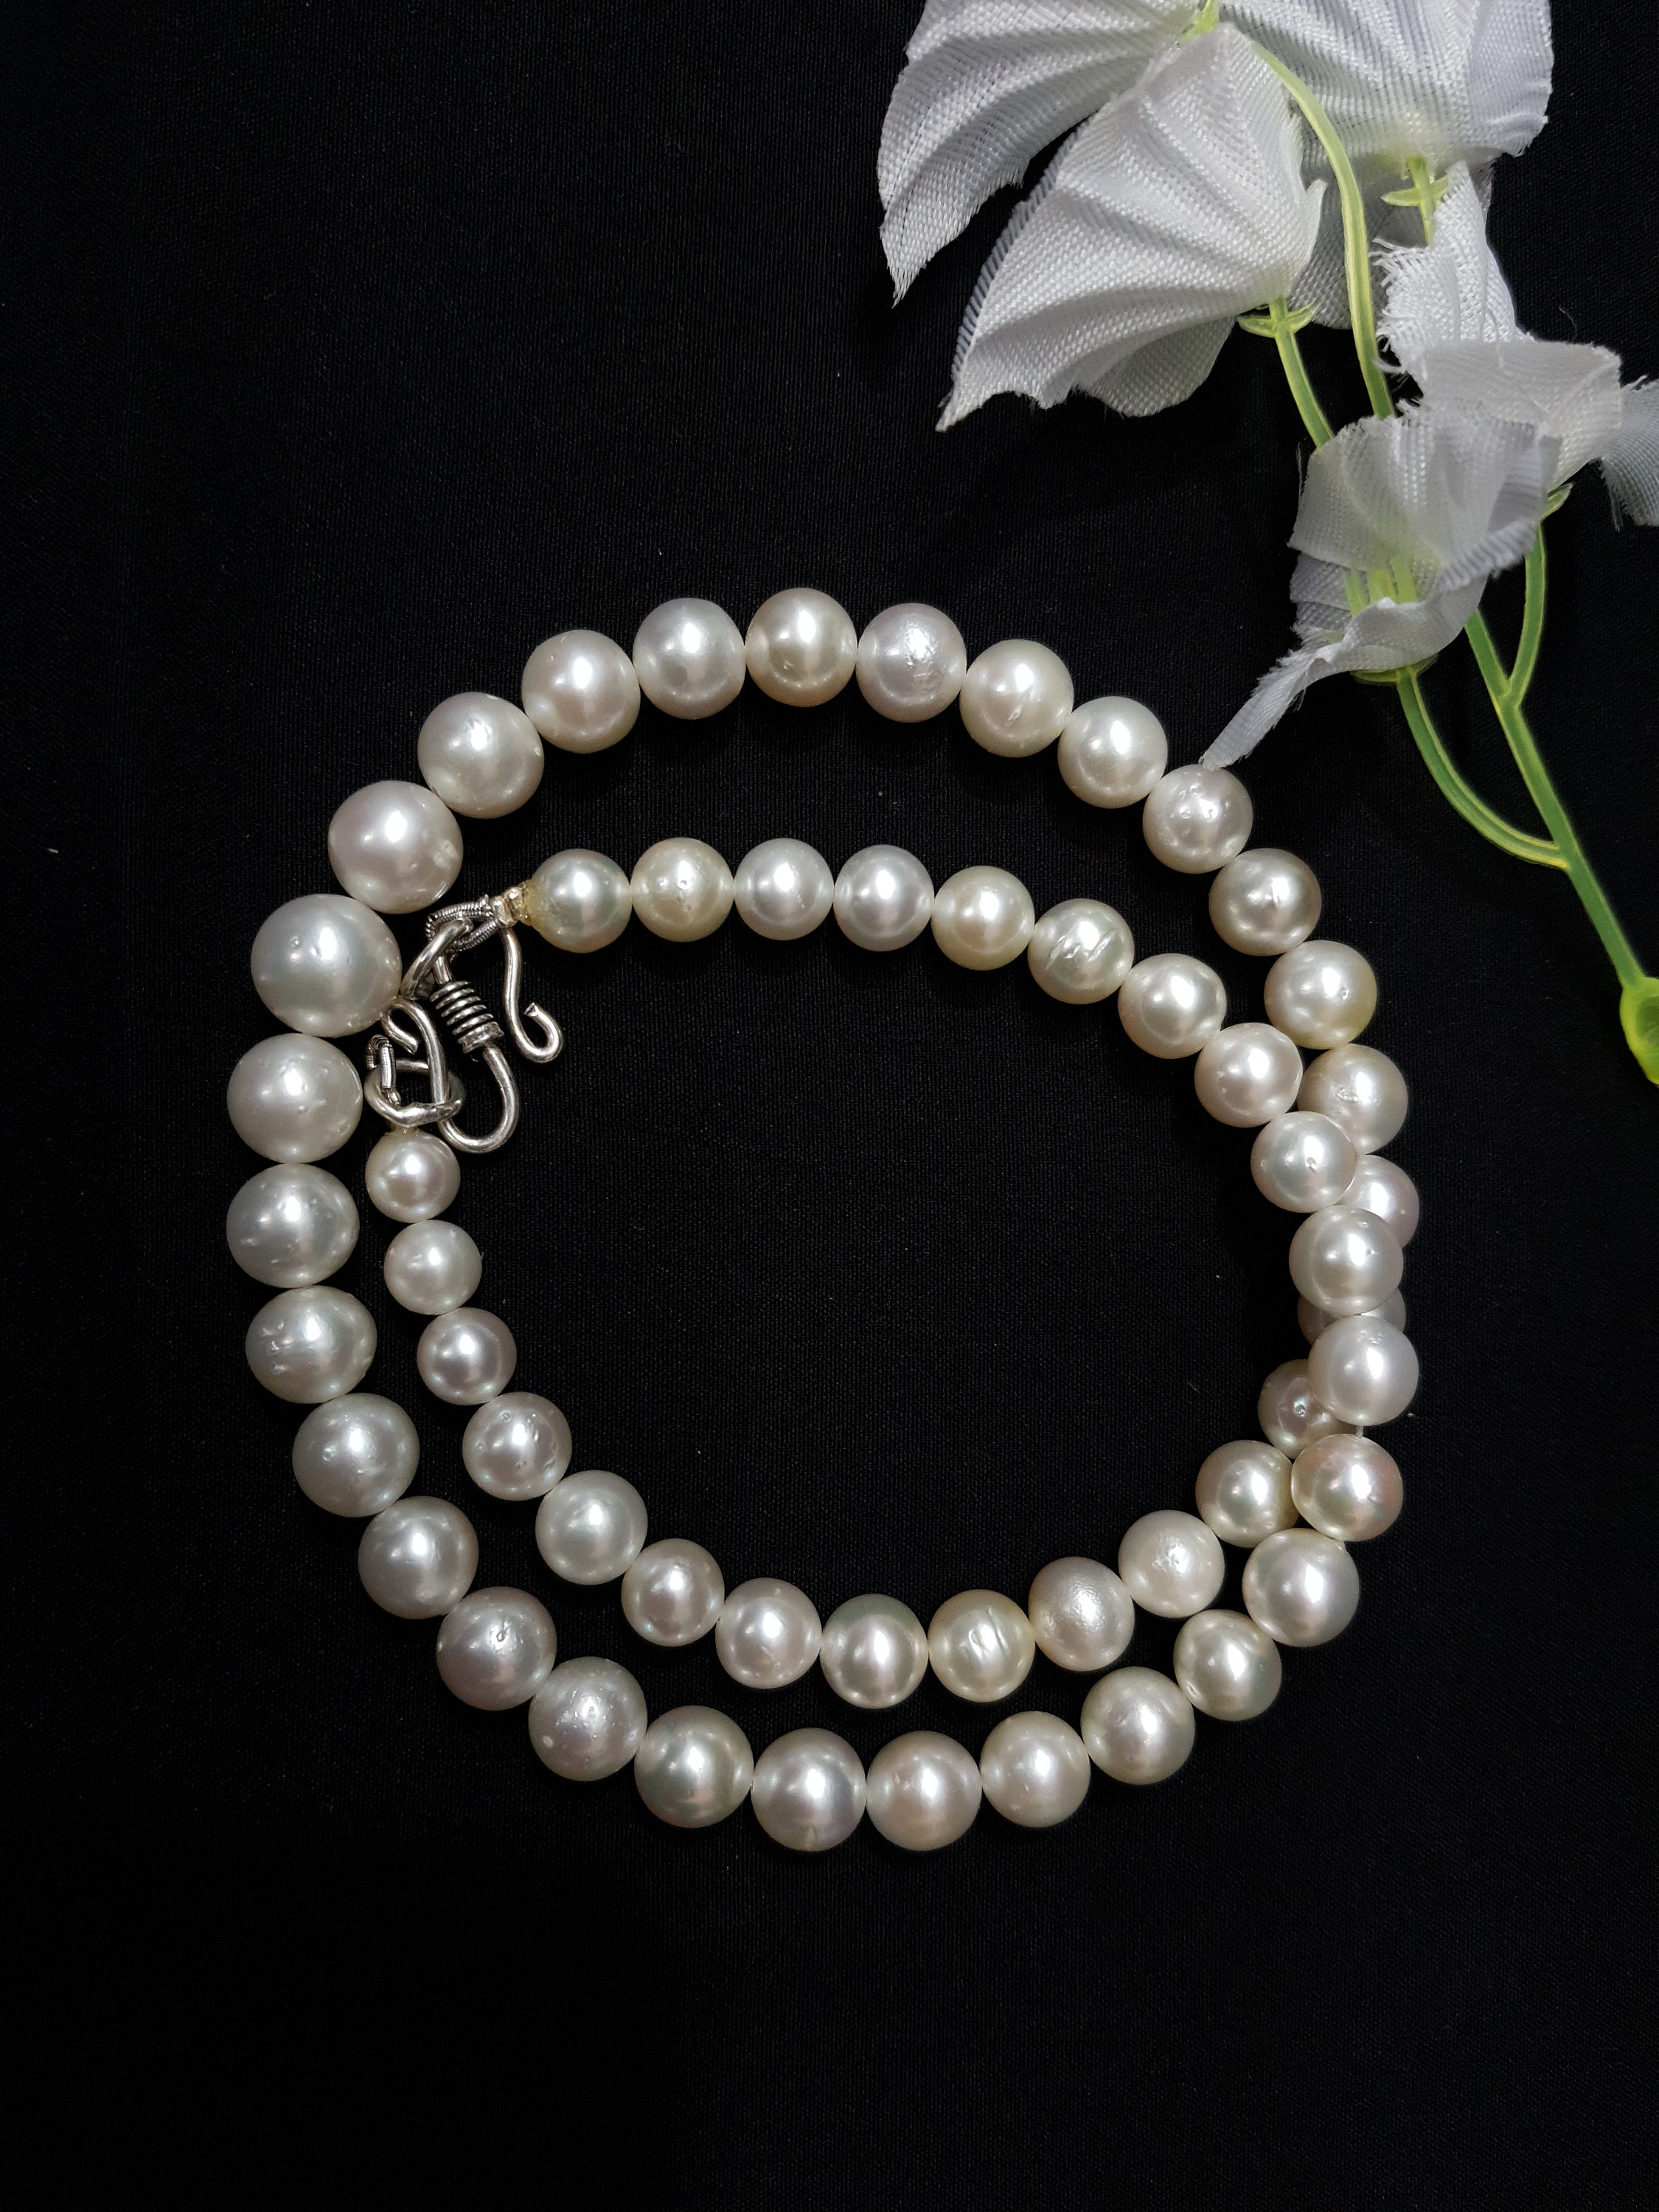 Monogram Pearls Necklace S00 - Men - Fashion Jewelry